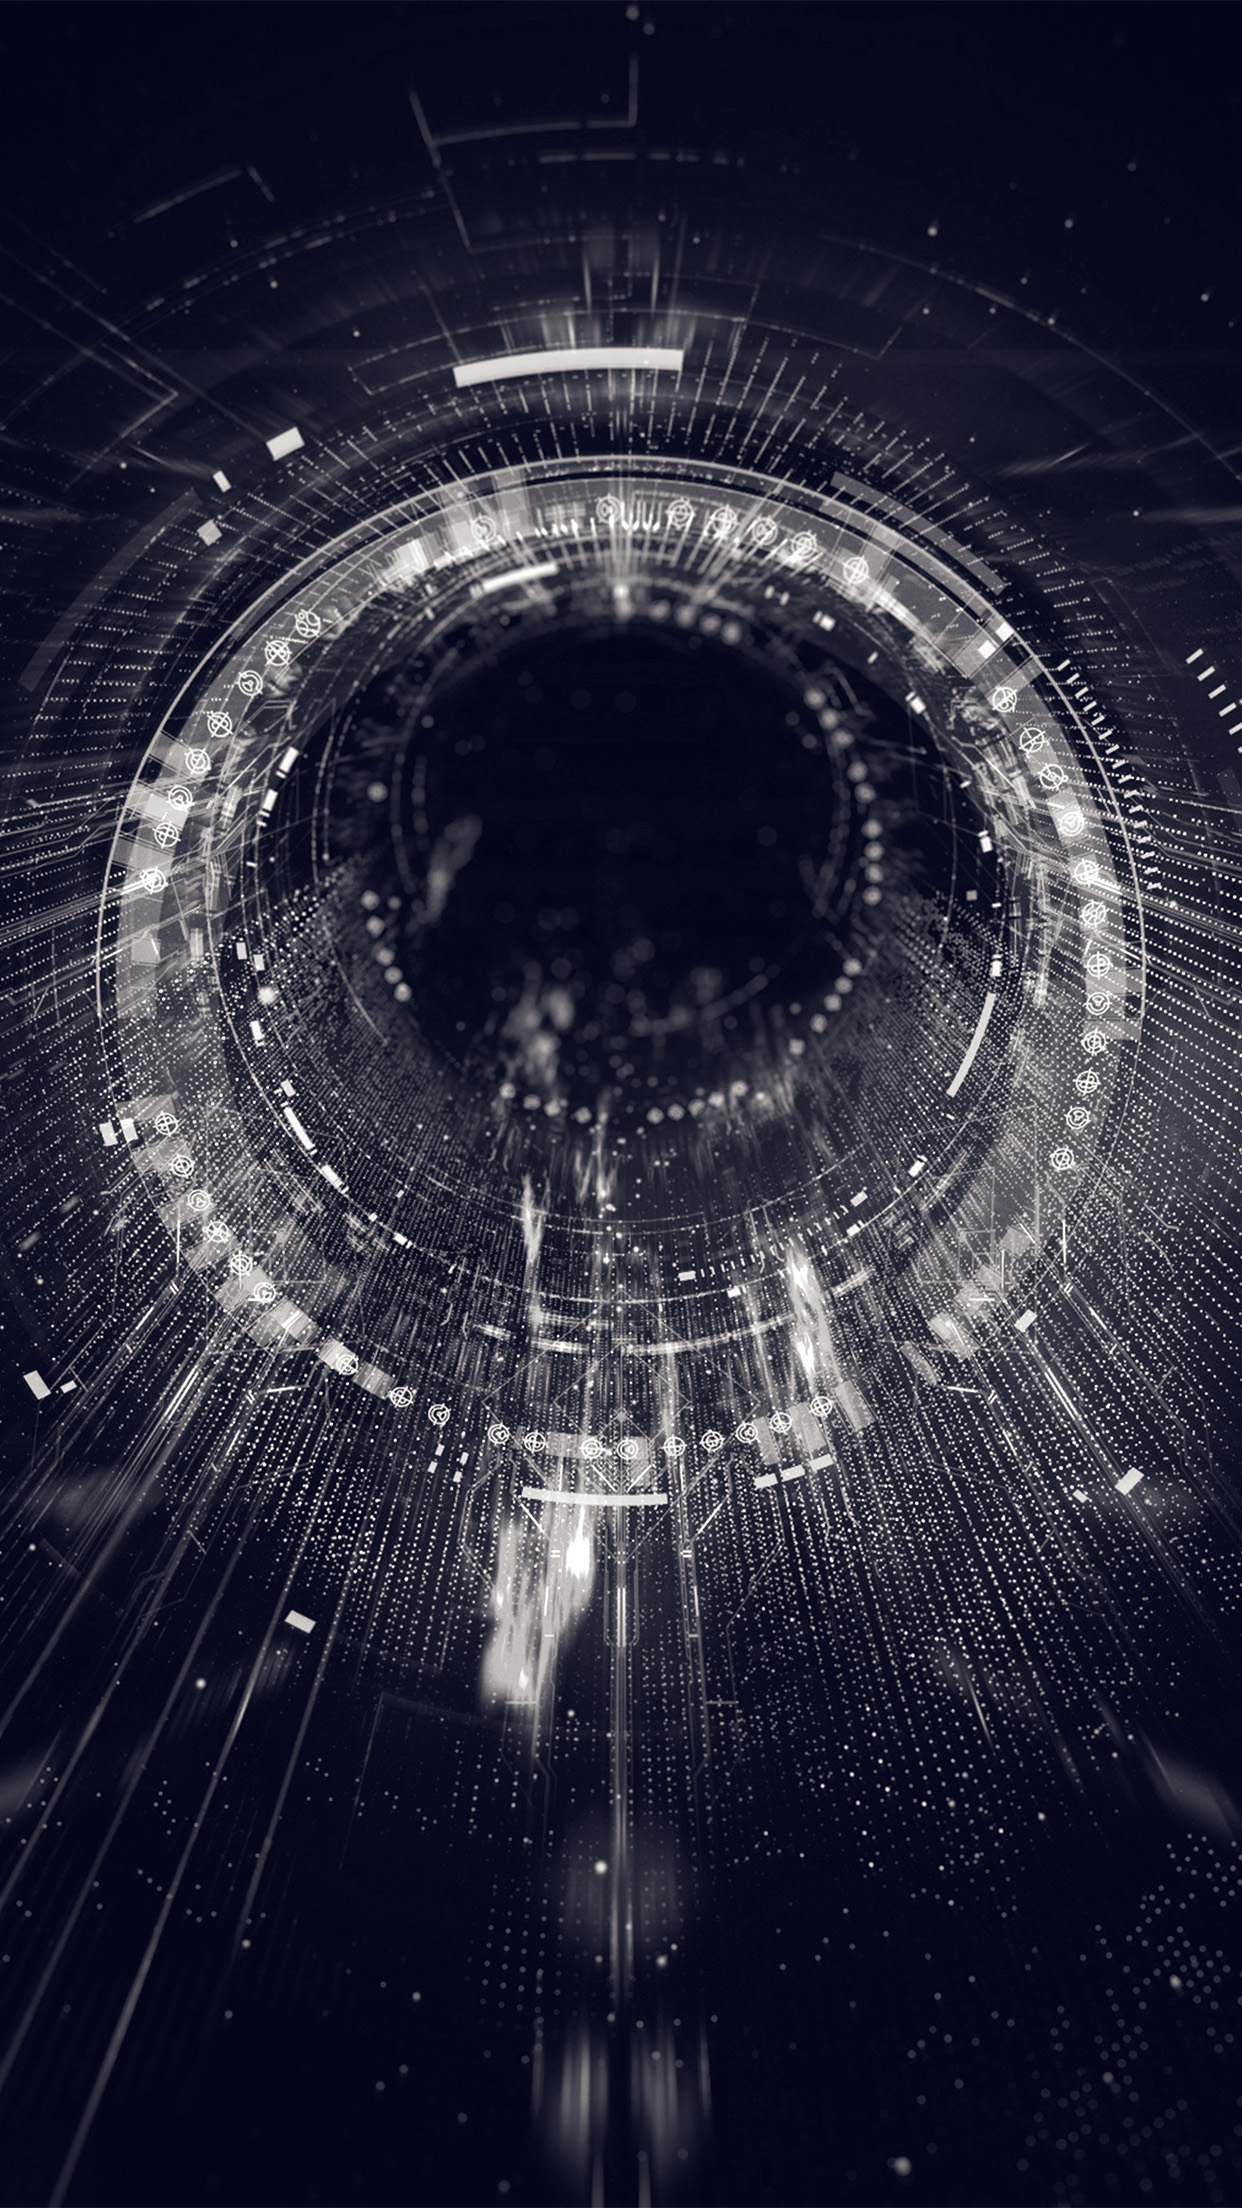 iPhone X wallpaper. circle blackhole dark bw digital illustration art